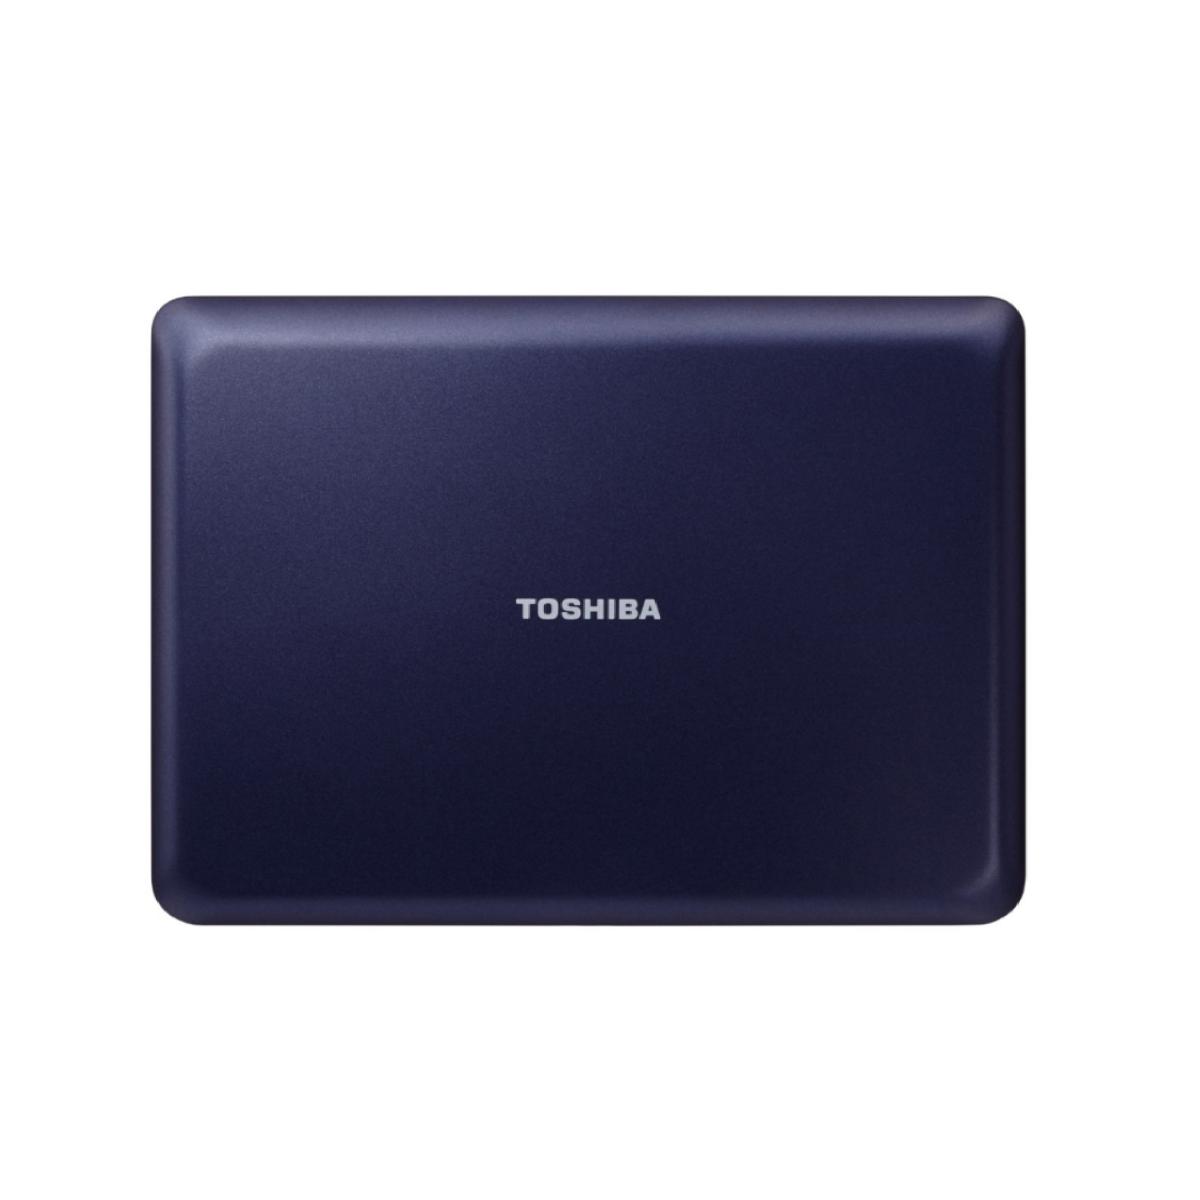 Toshiba Regza ポータブルDVDプレーヤー SD-P710SL